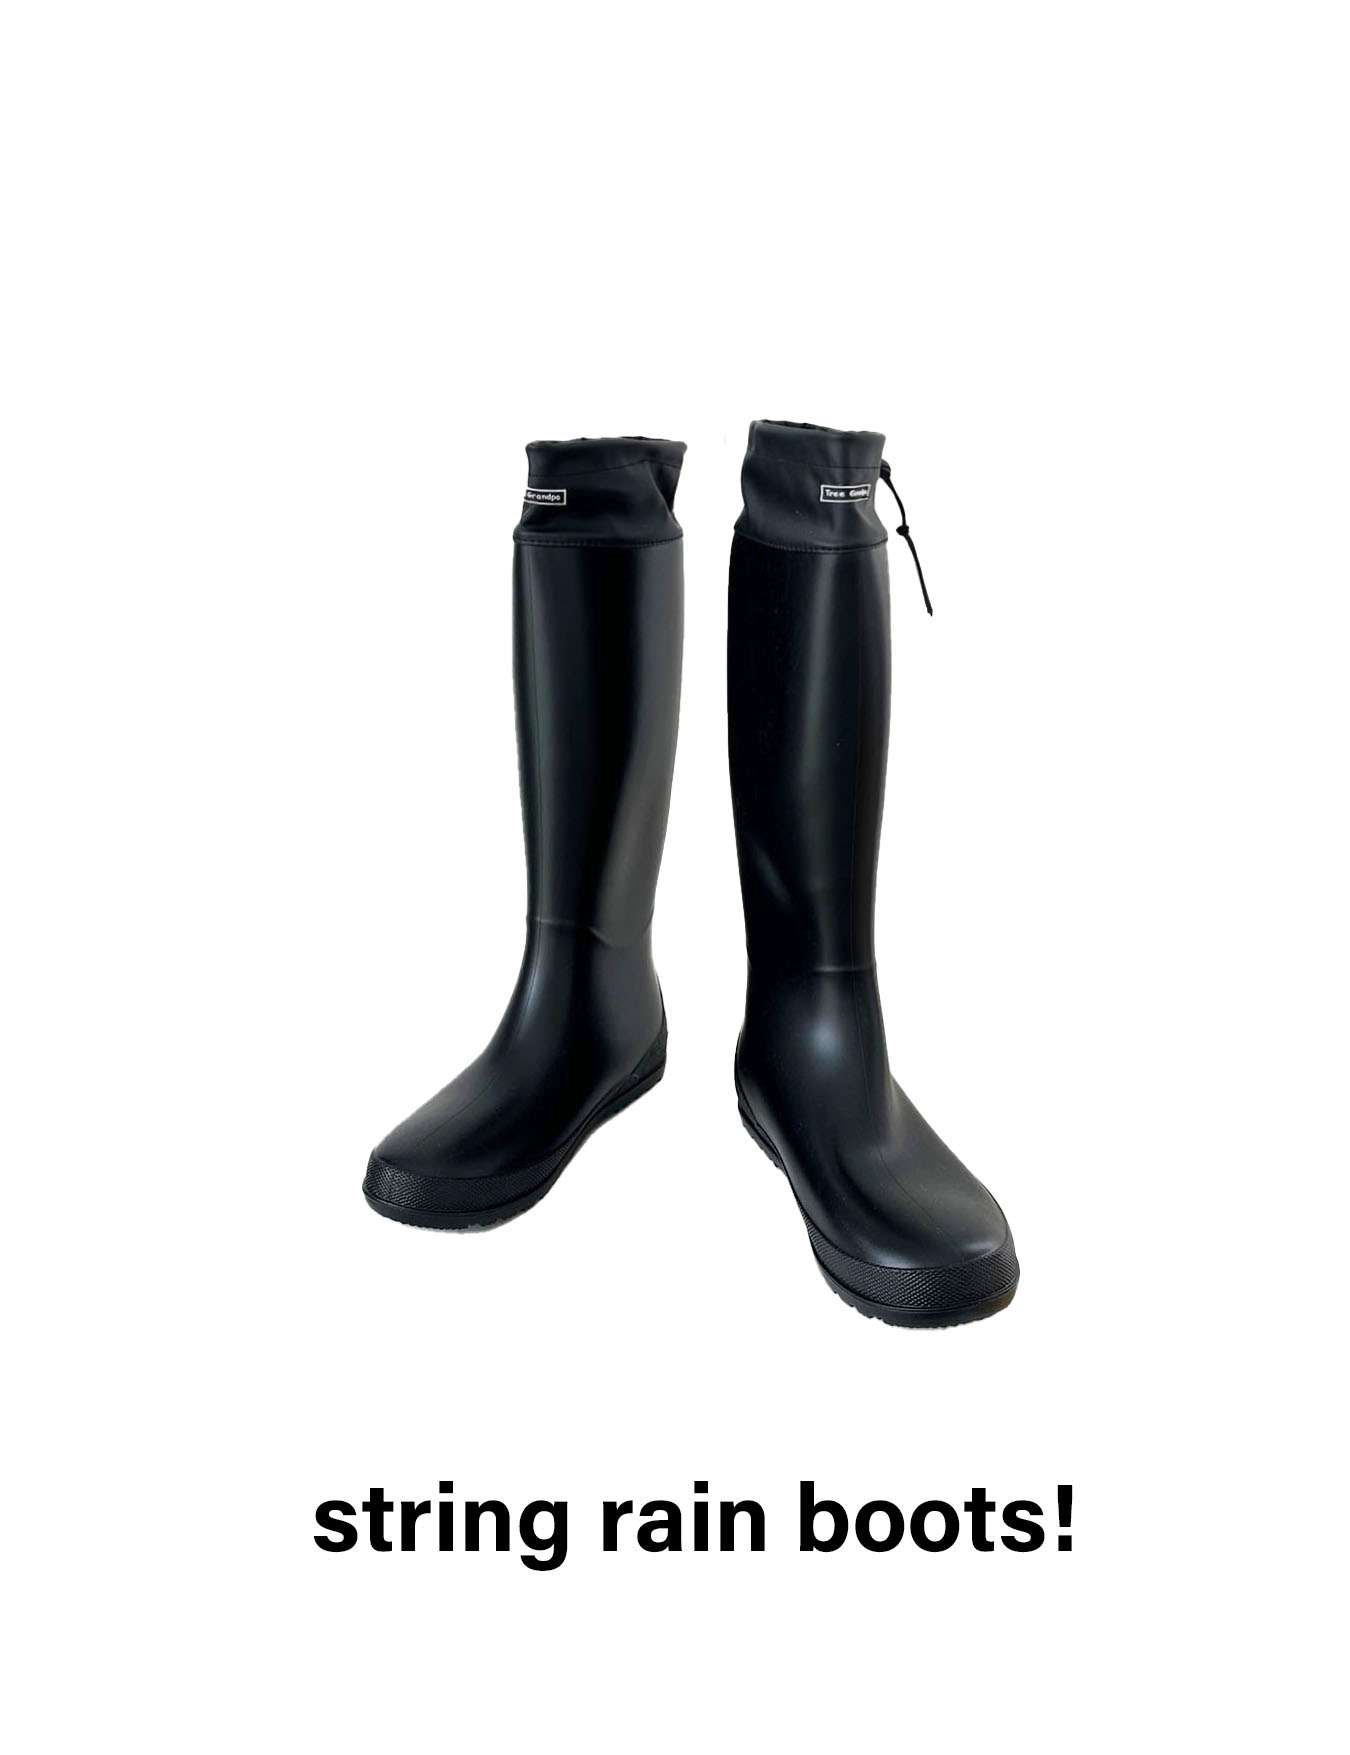 string rain boots